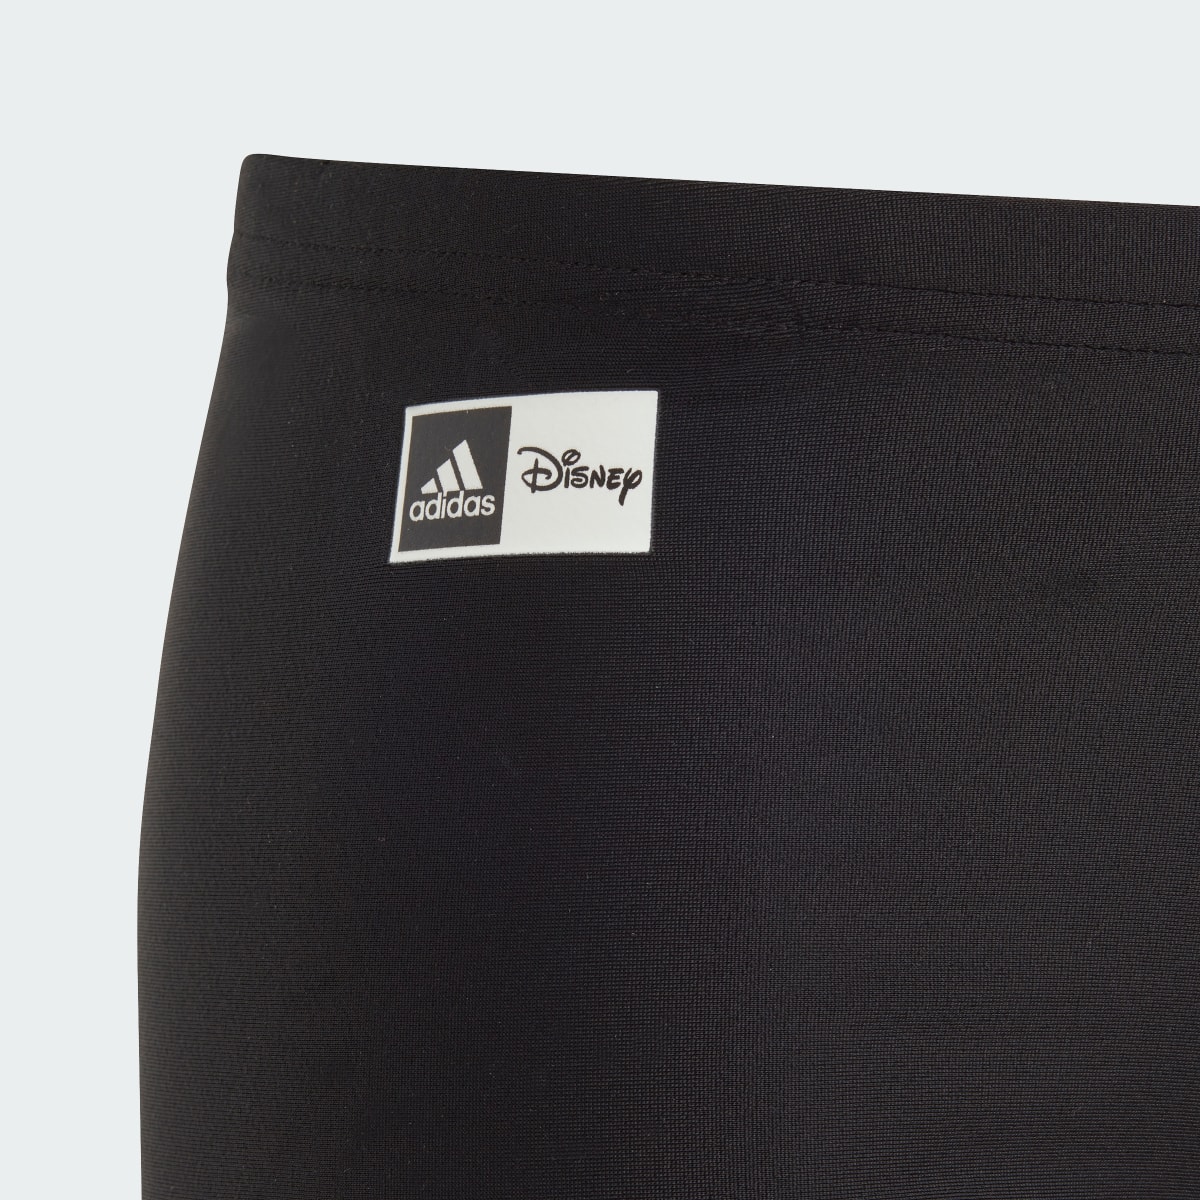 Adidas Boxers de Natação Mickey Vacation Memories adidas x Disney. 4